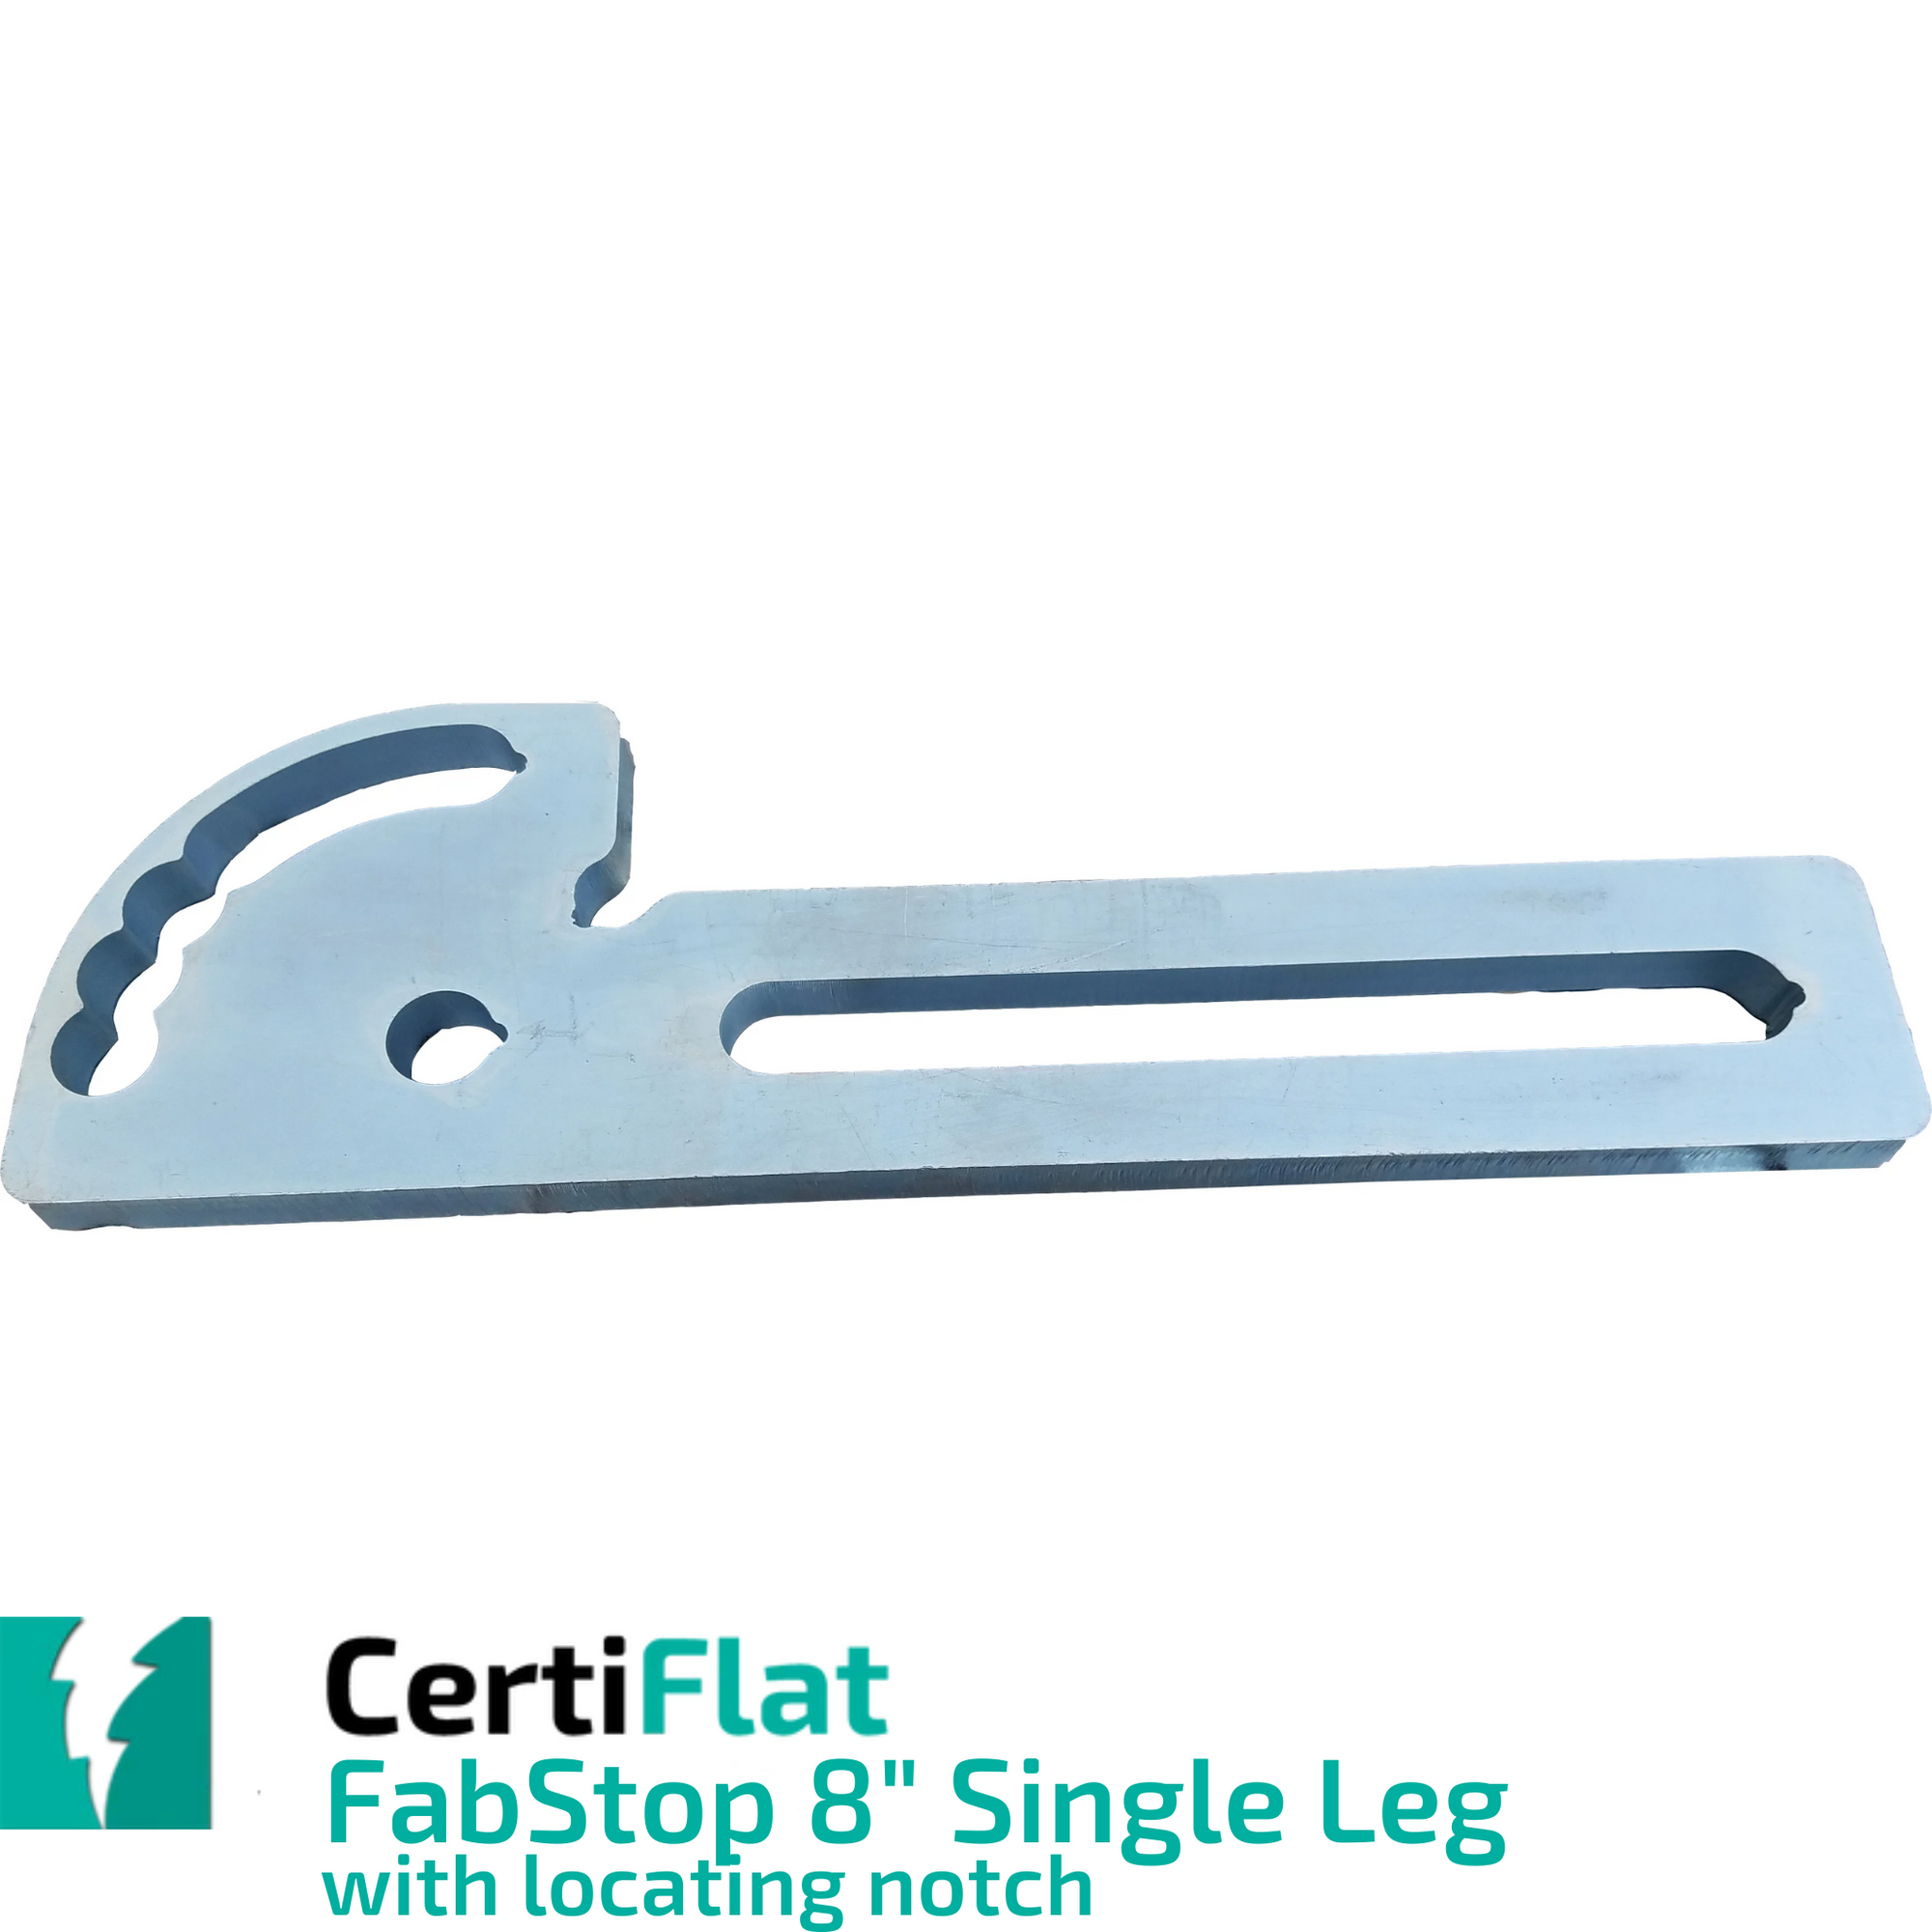 CertiFlat 8" Single Leg FabStop with Locating Notch